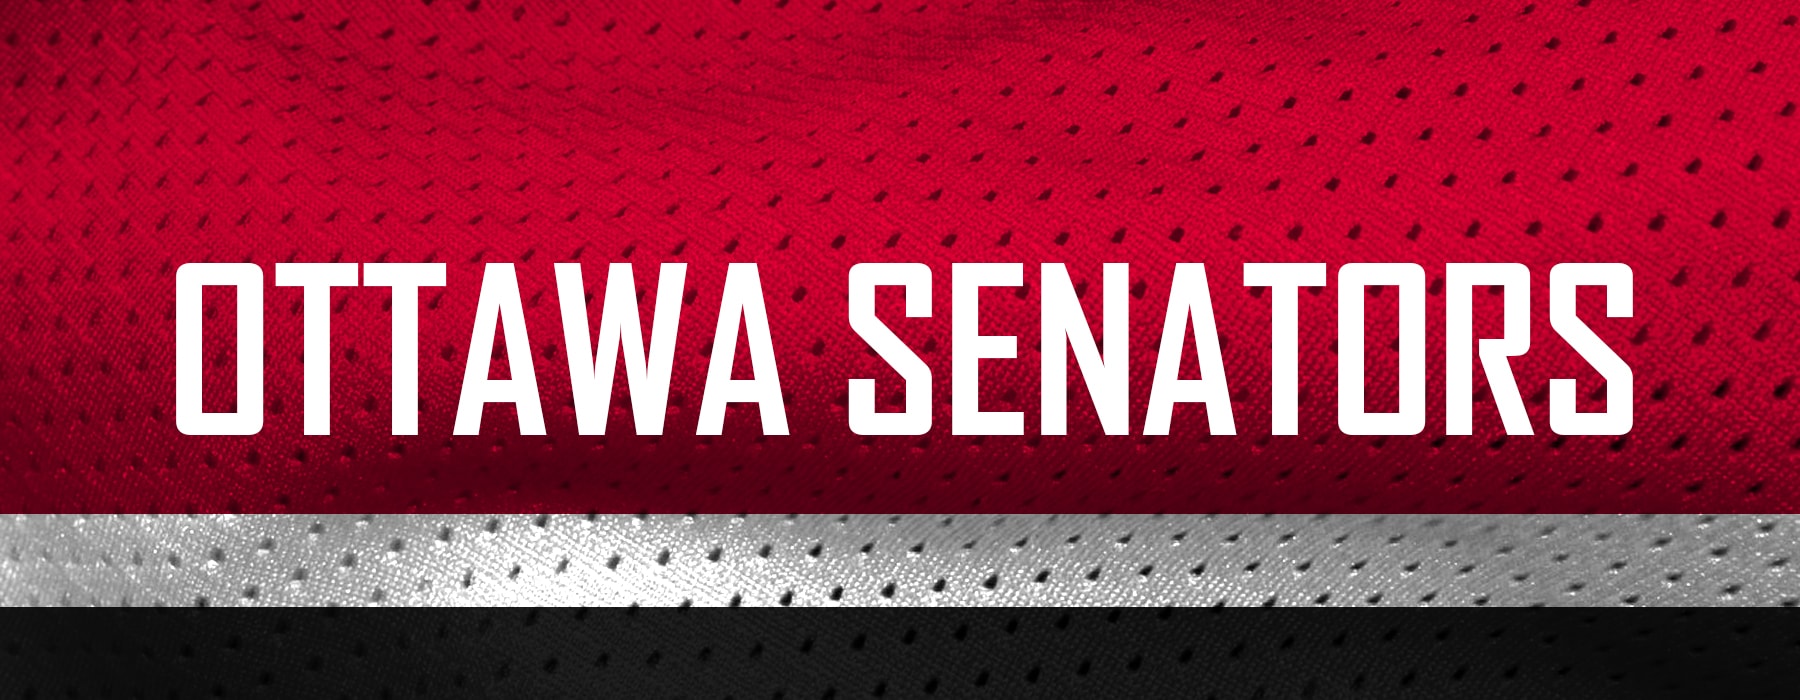 Ottawa Senators NHL Fan Towels for sale